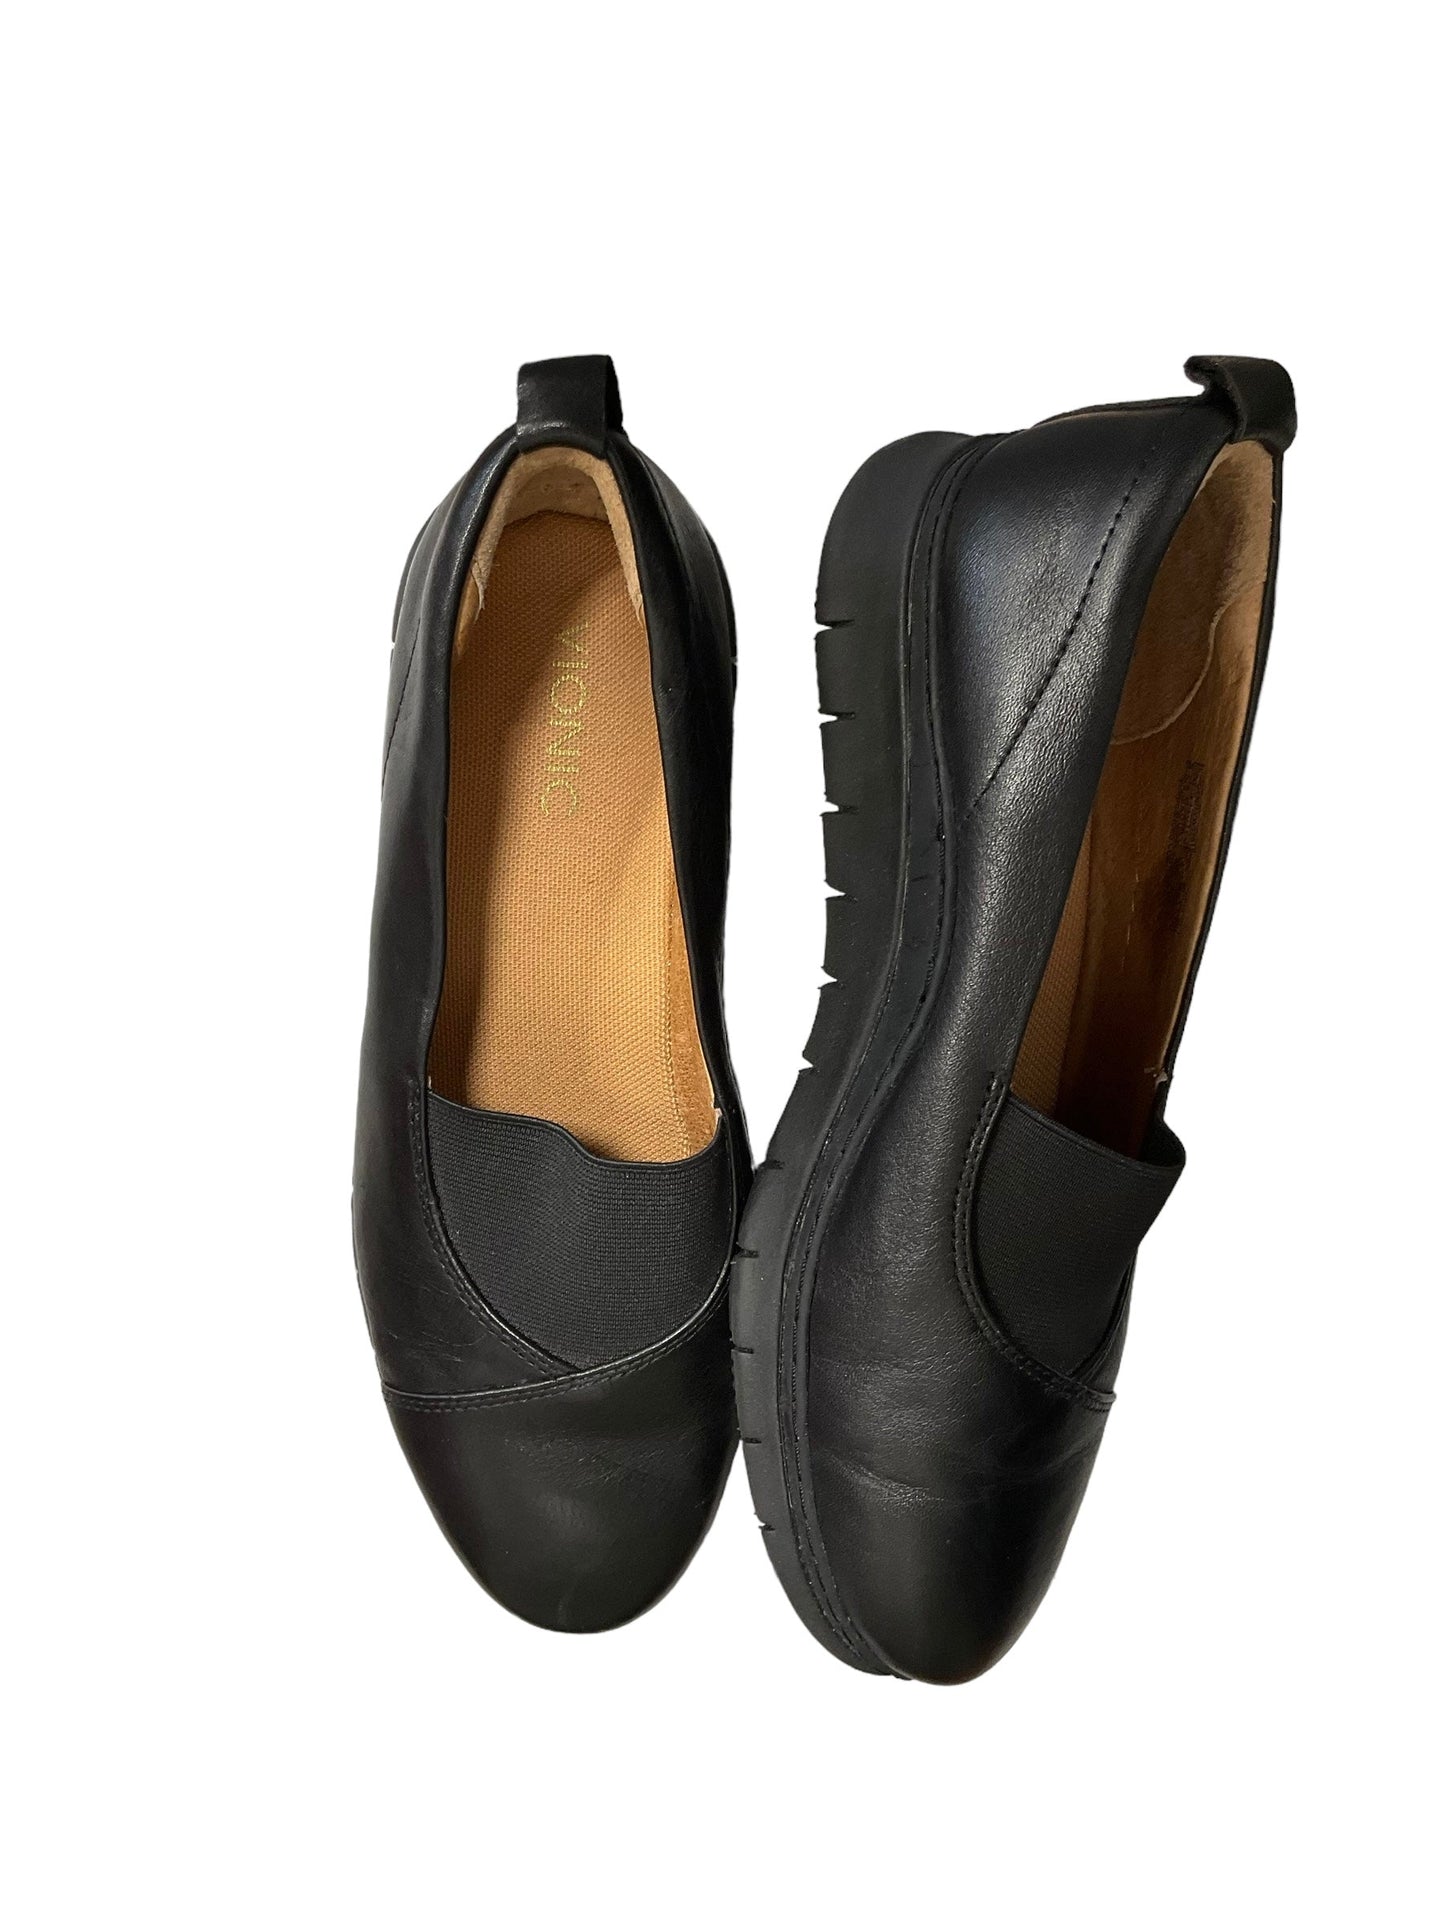 Black Shoes Flats Vionic, Size 8.5